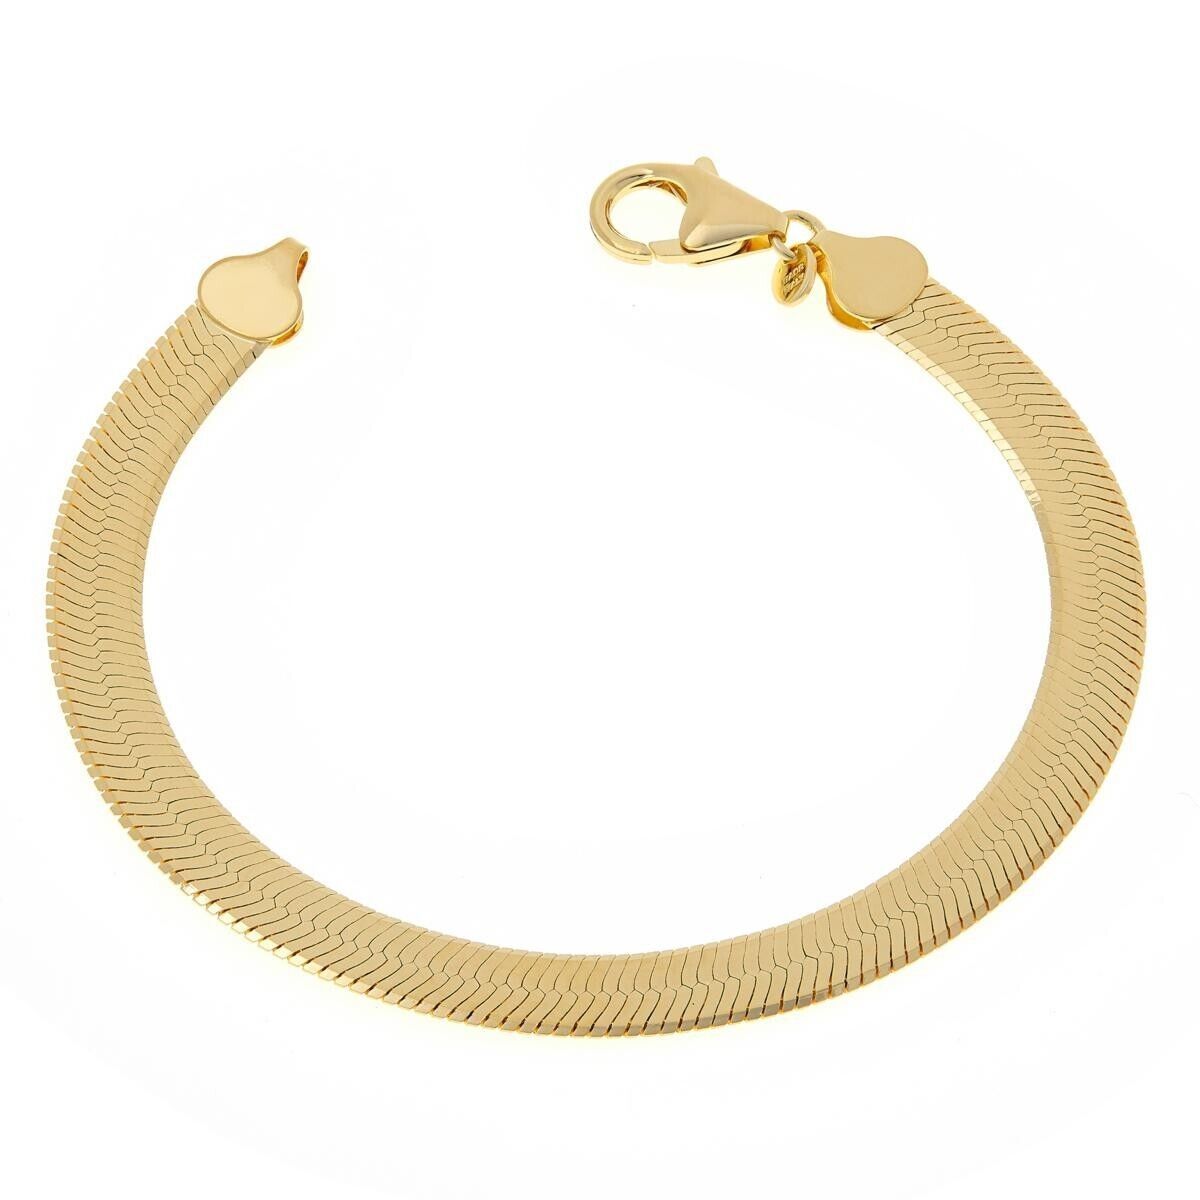 Bellezza Bronze Goldtone Herringbone Chain Bracelet. 7-1/2"